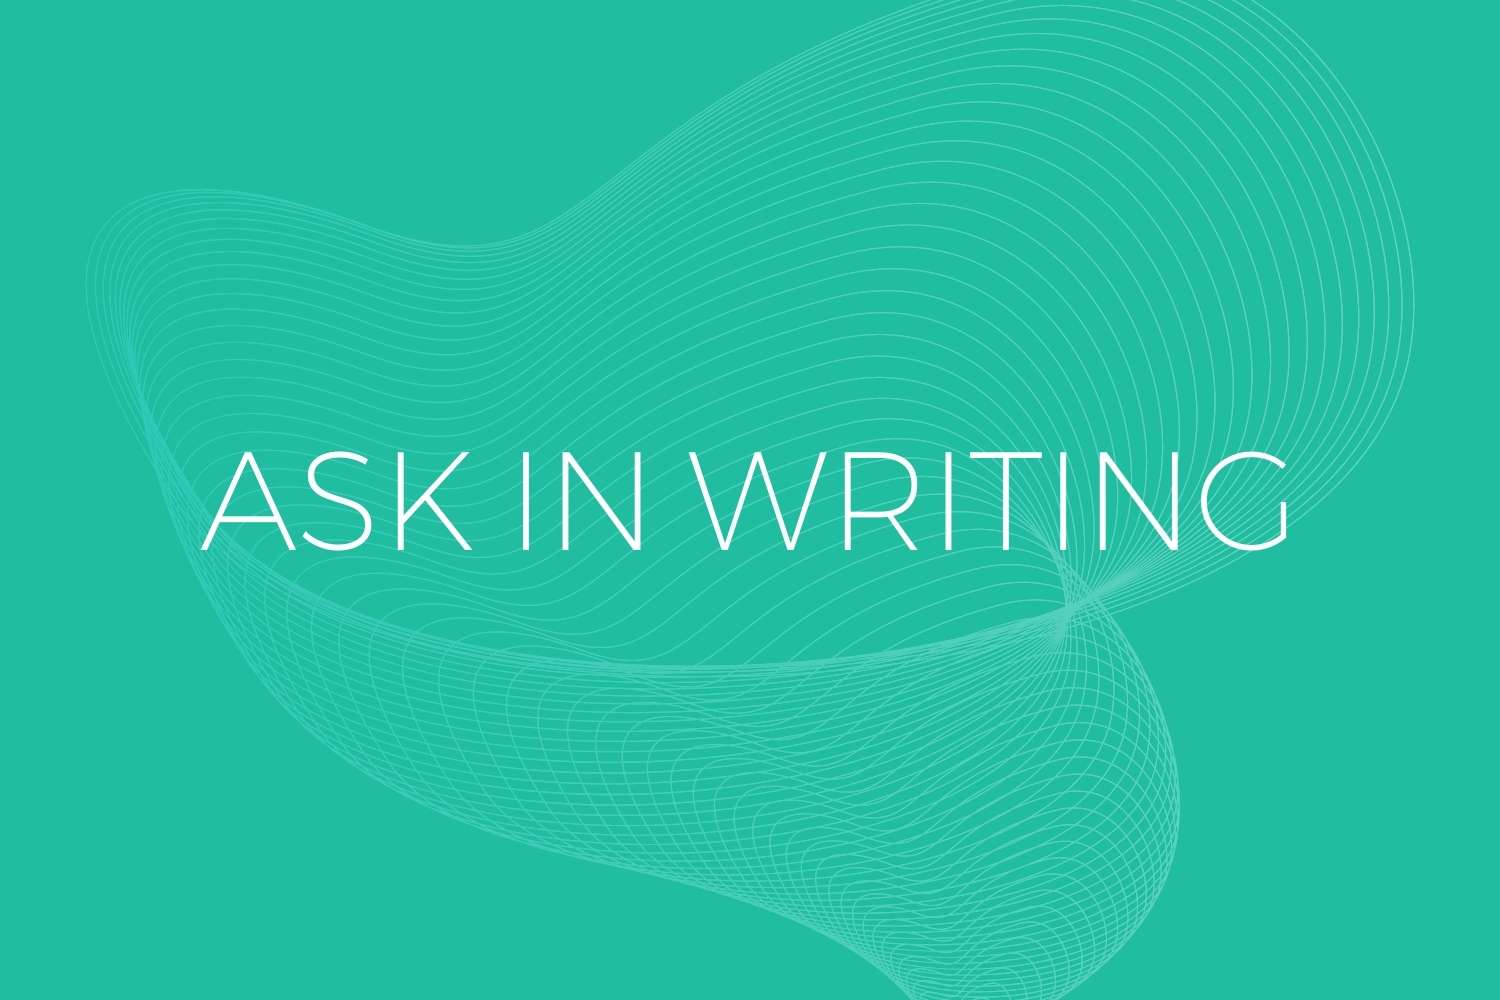 Ask in writing